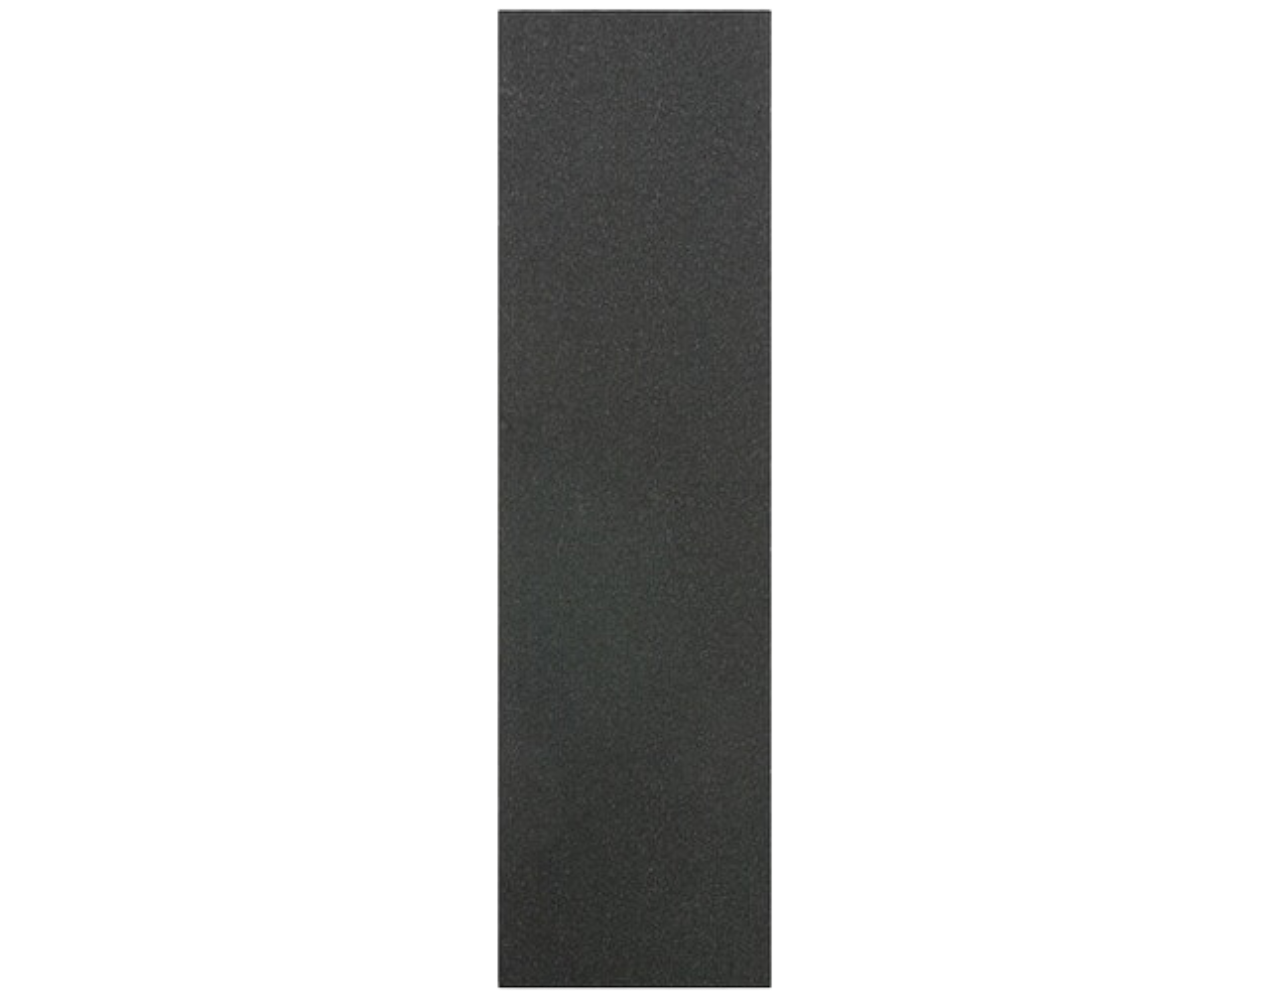 Fruity Griptape (9 x 33) Black Perforated Single Sheet